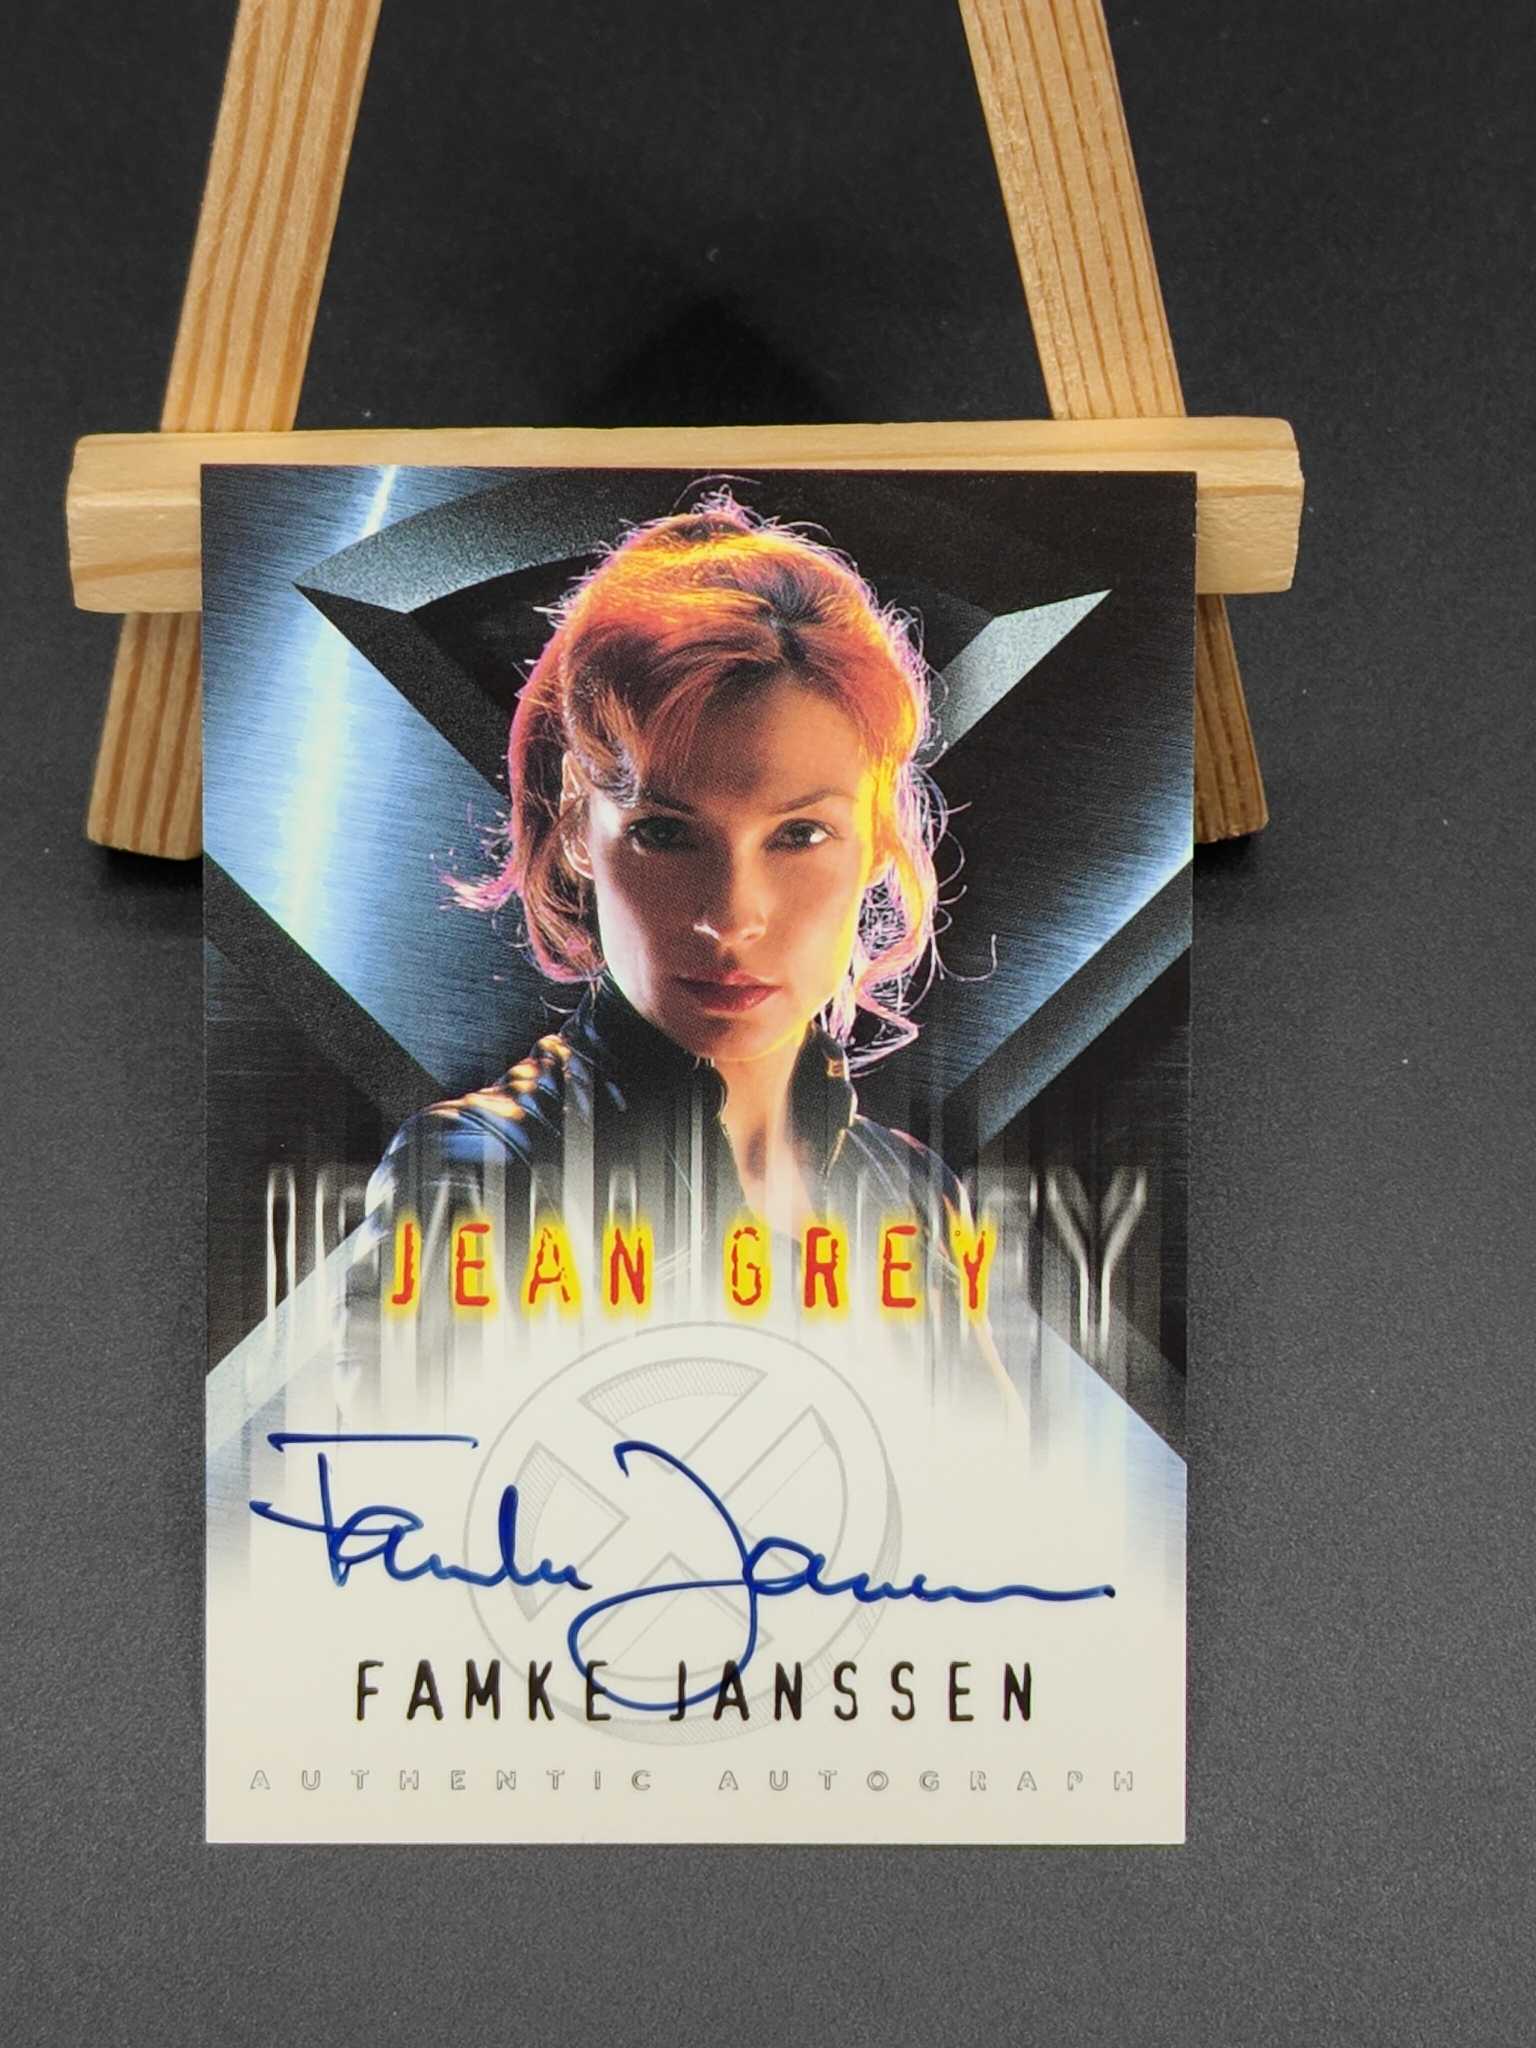 2000 Topps X to Men Famke Janssen 寄付顺丰 漫威 x战警 007 美女卡 法米克 詹森 XMEN Jean Grey 卡签签字 代ccm